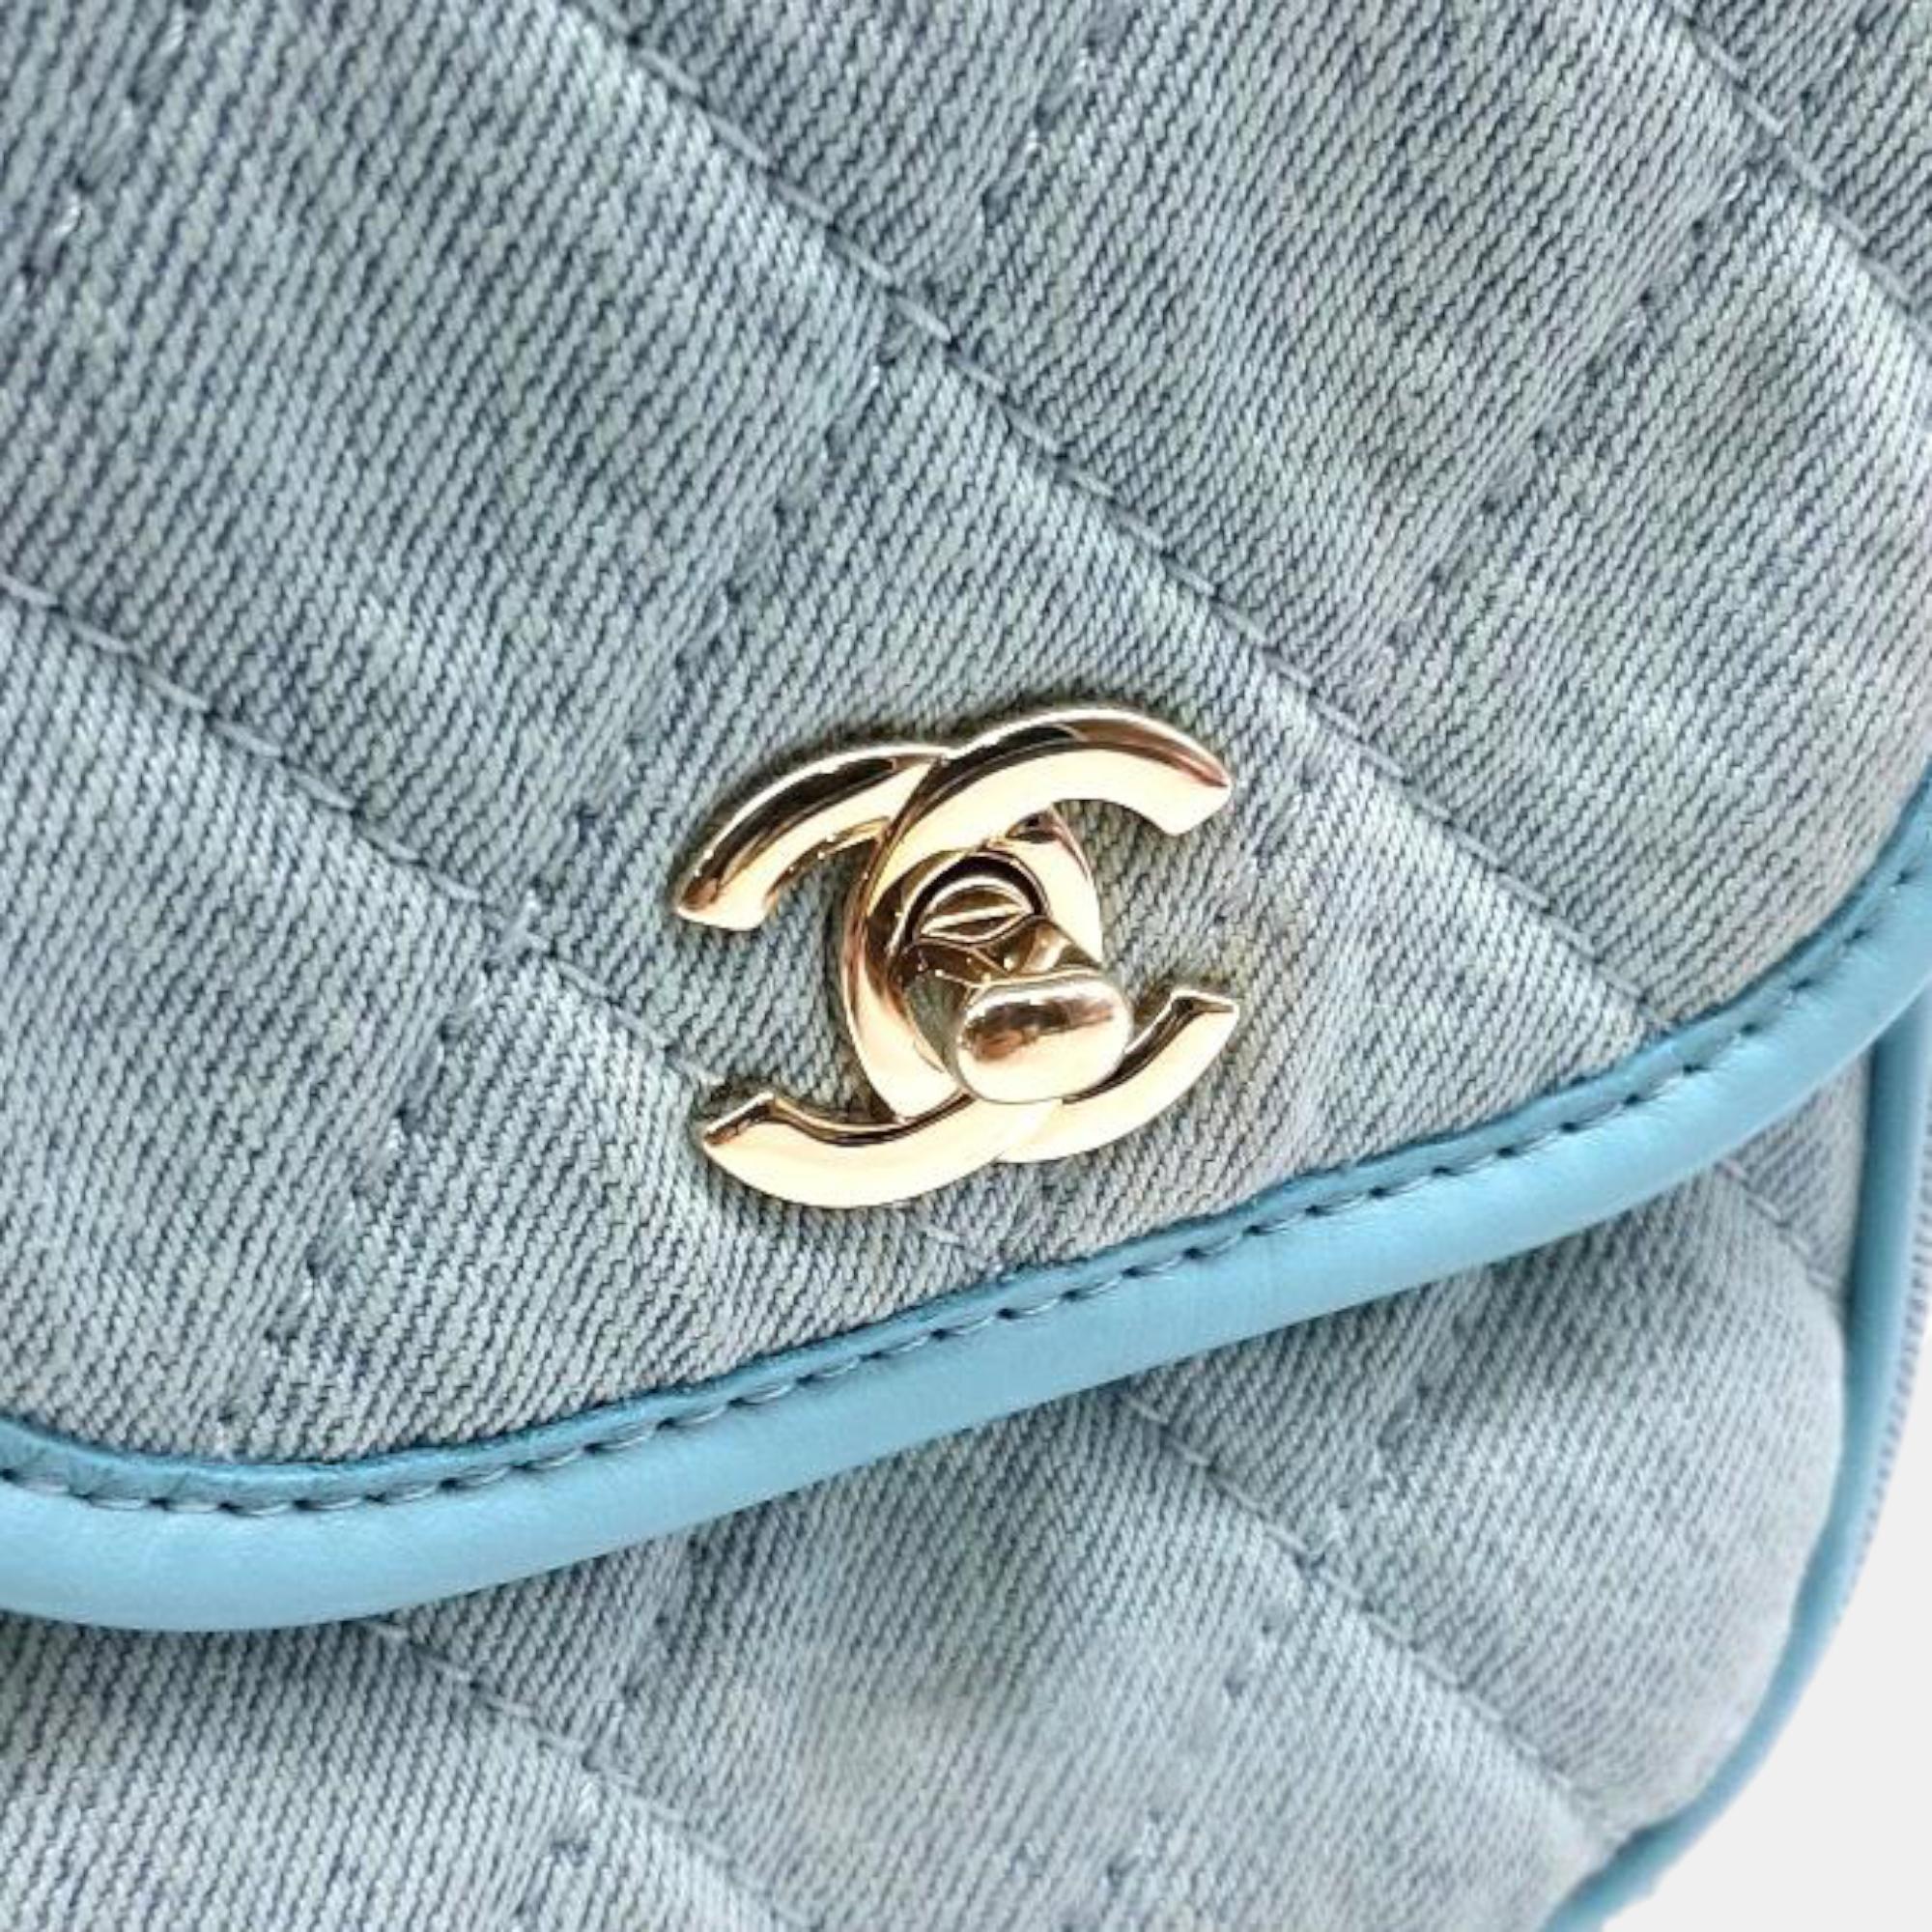 Chanel Blue Fabric CC Mini Messenger Bag